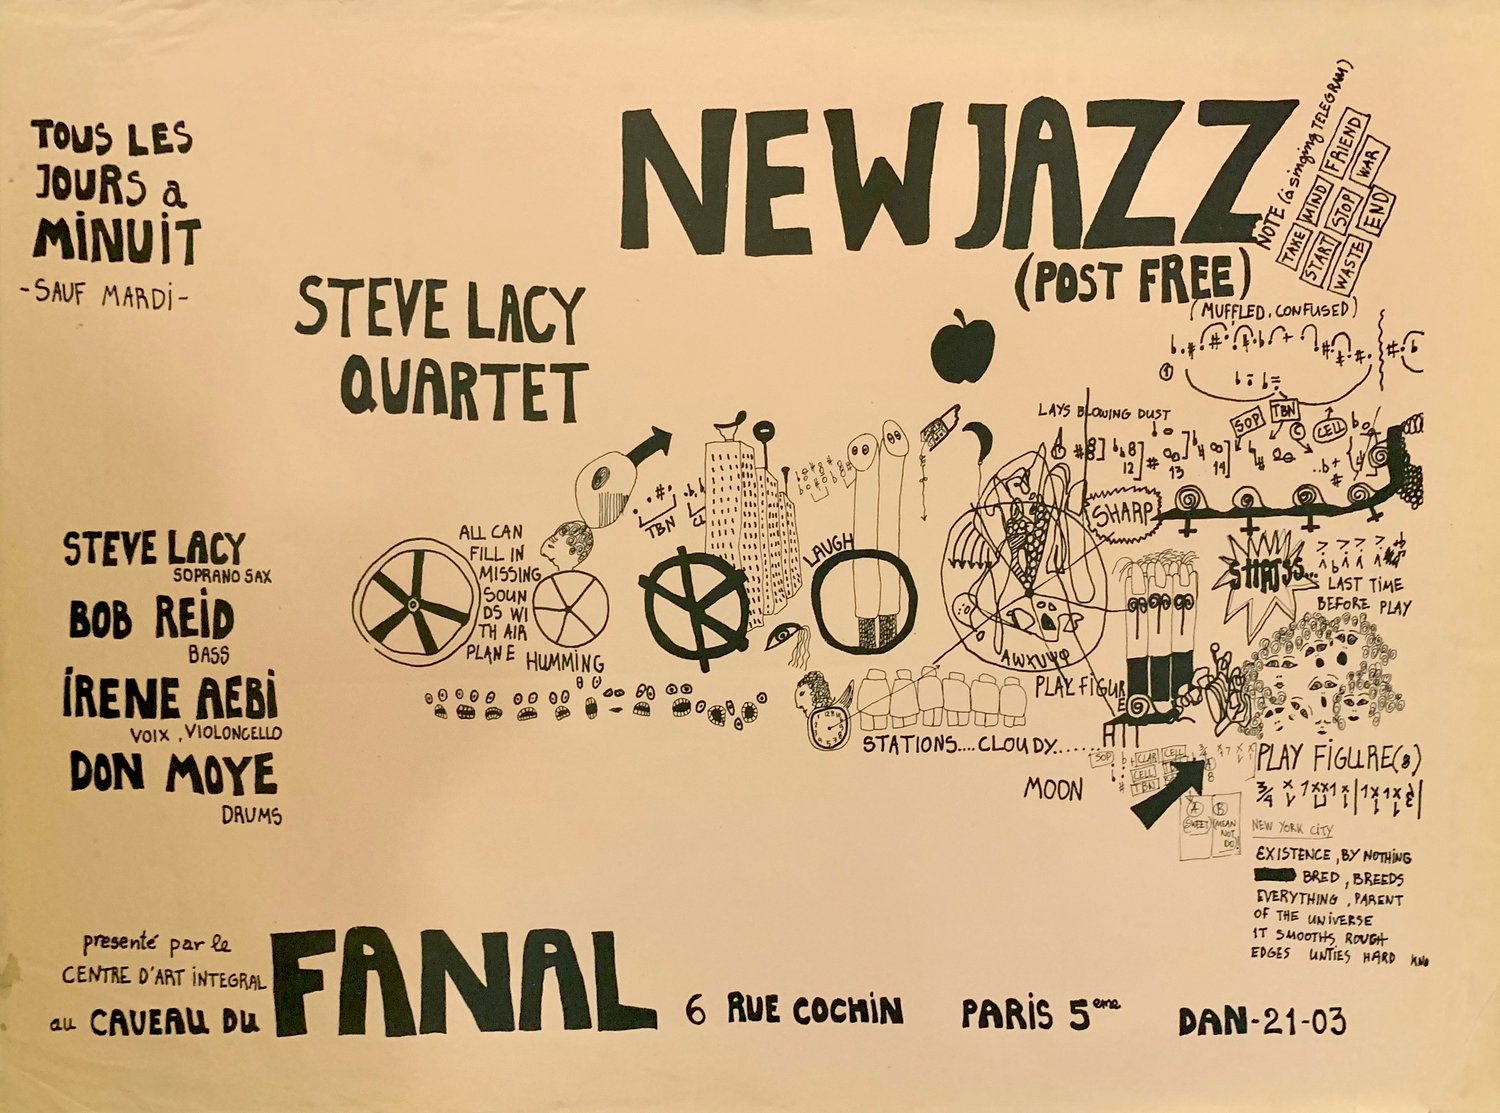 Steve Lacy Quartet - New Jazz (Post Free) poster 